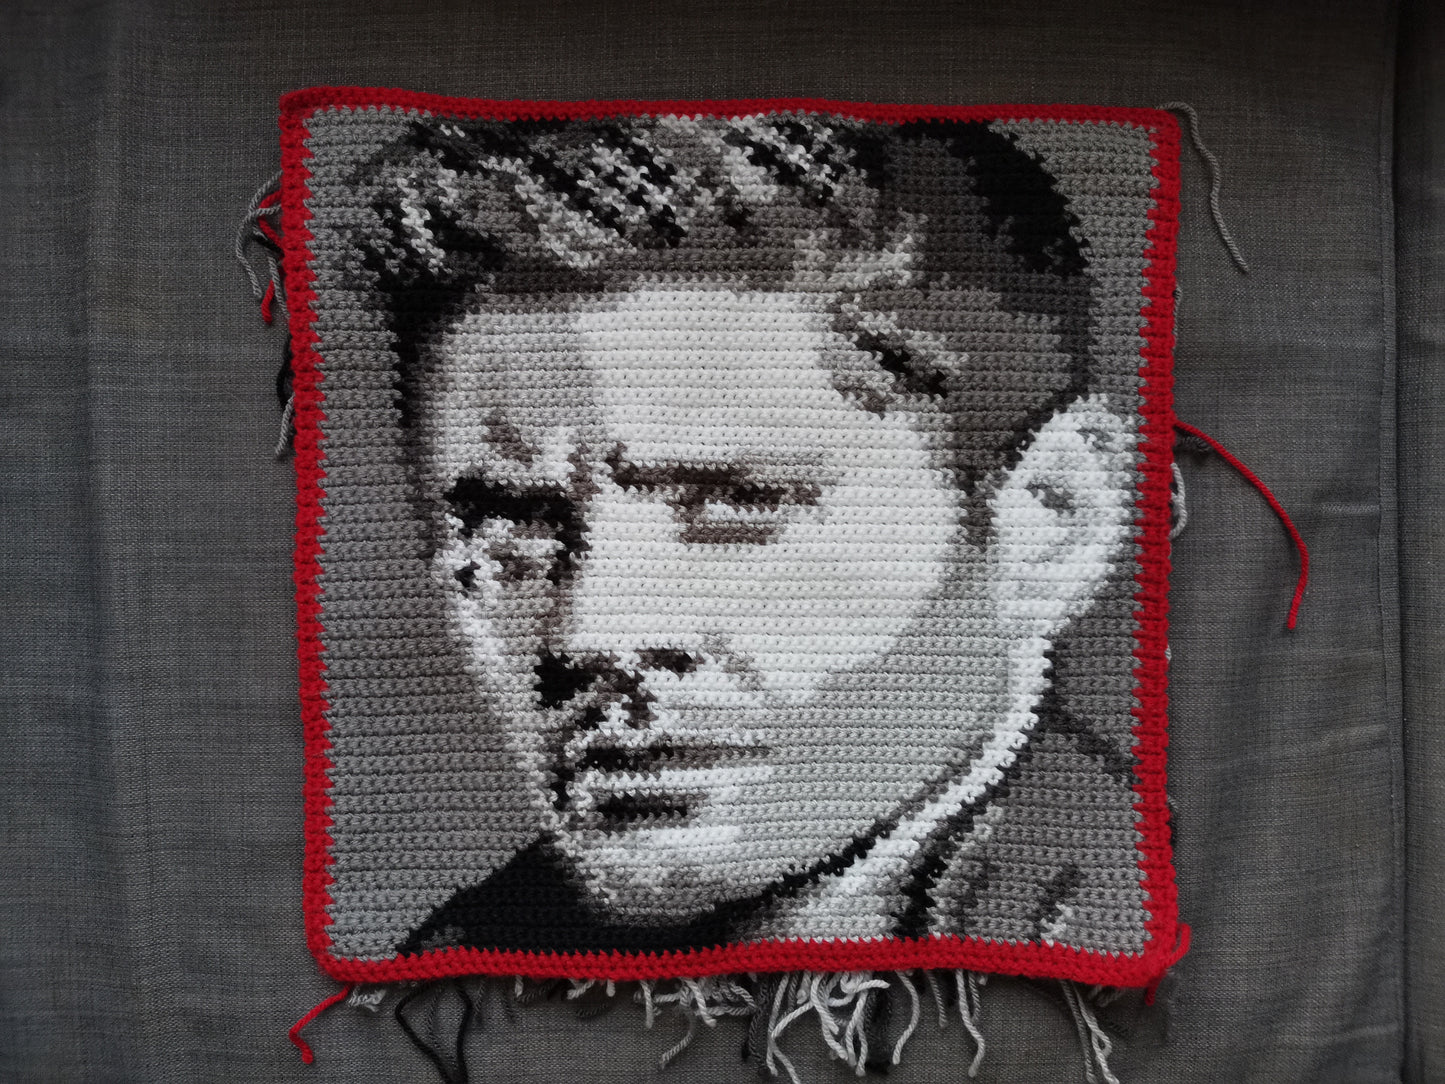 Dean Winchester photo crochet graphghan patterns